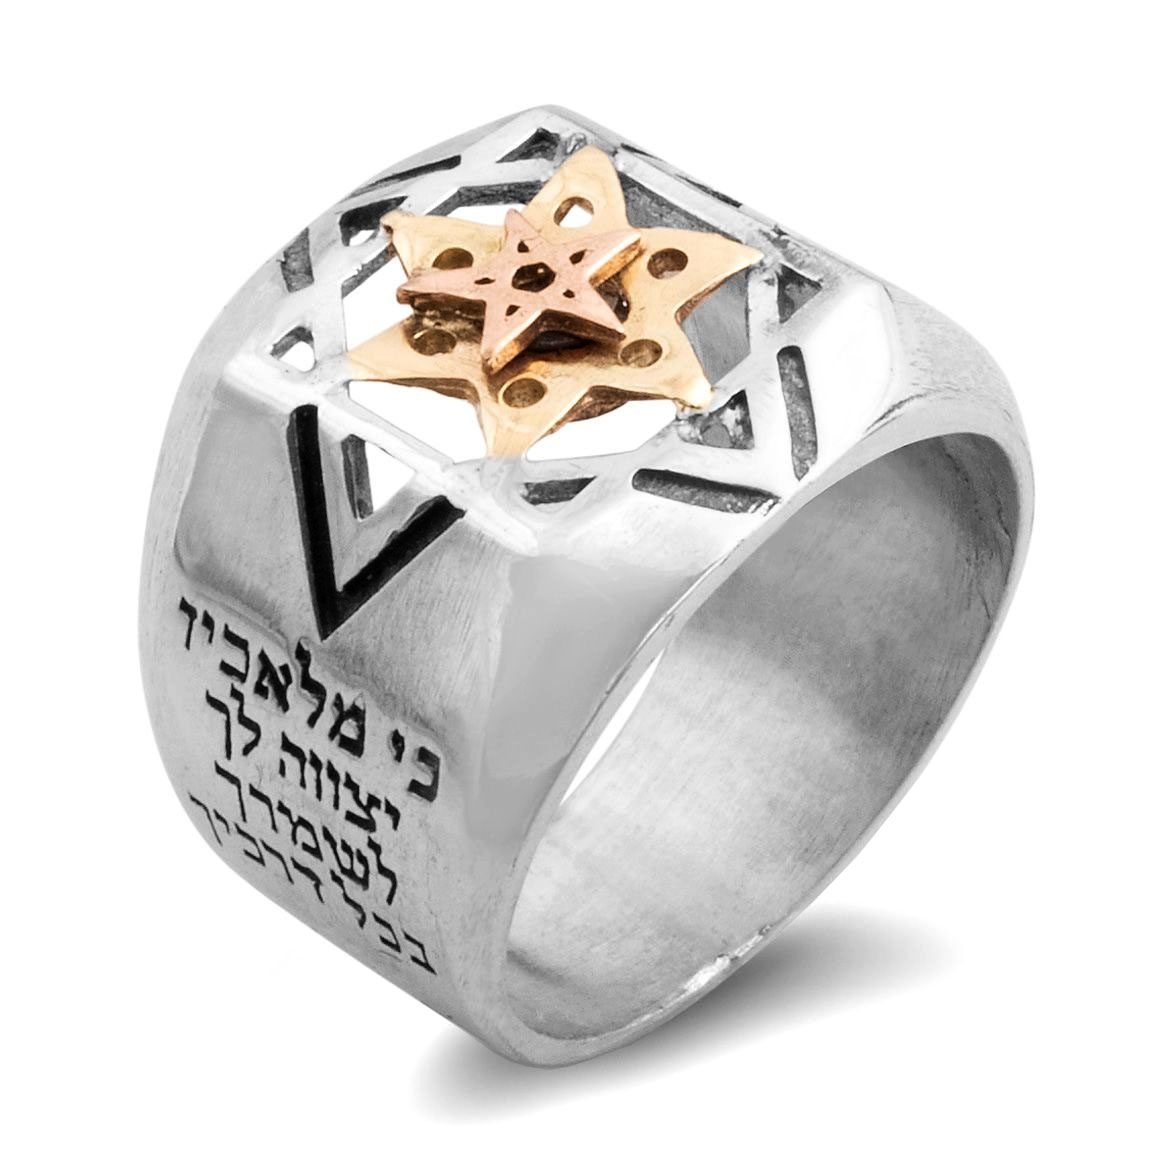 Silver and Gold Five Metals Tikkun Chava Kabbalah Ring - Traveler's Prayer - Psalms 91:11 - 1